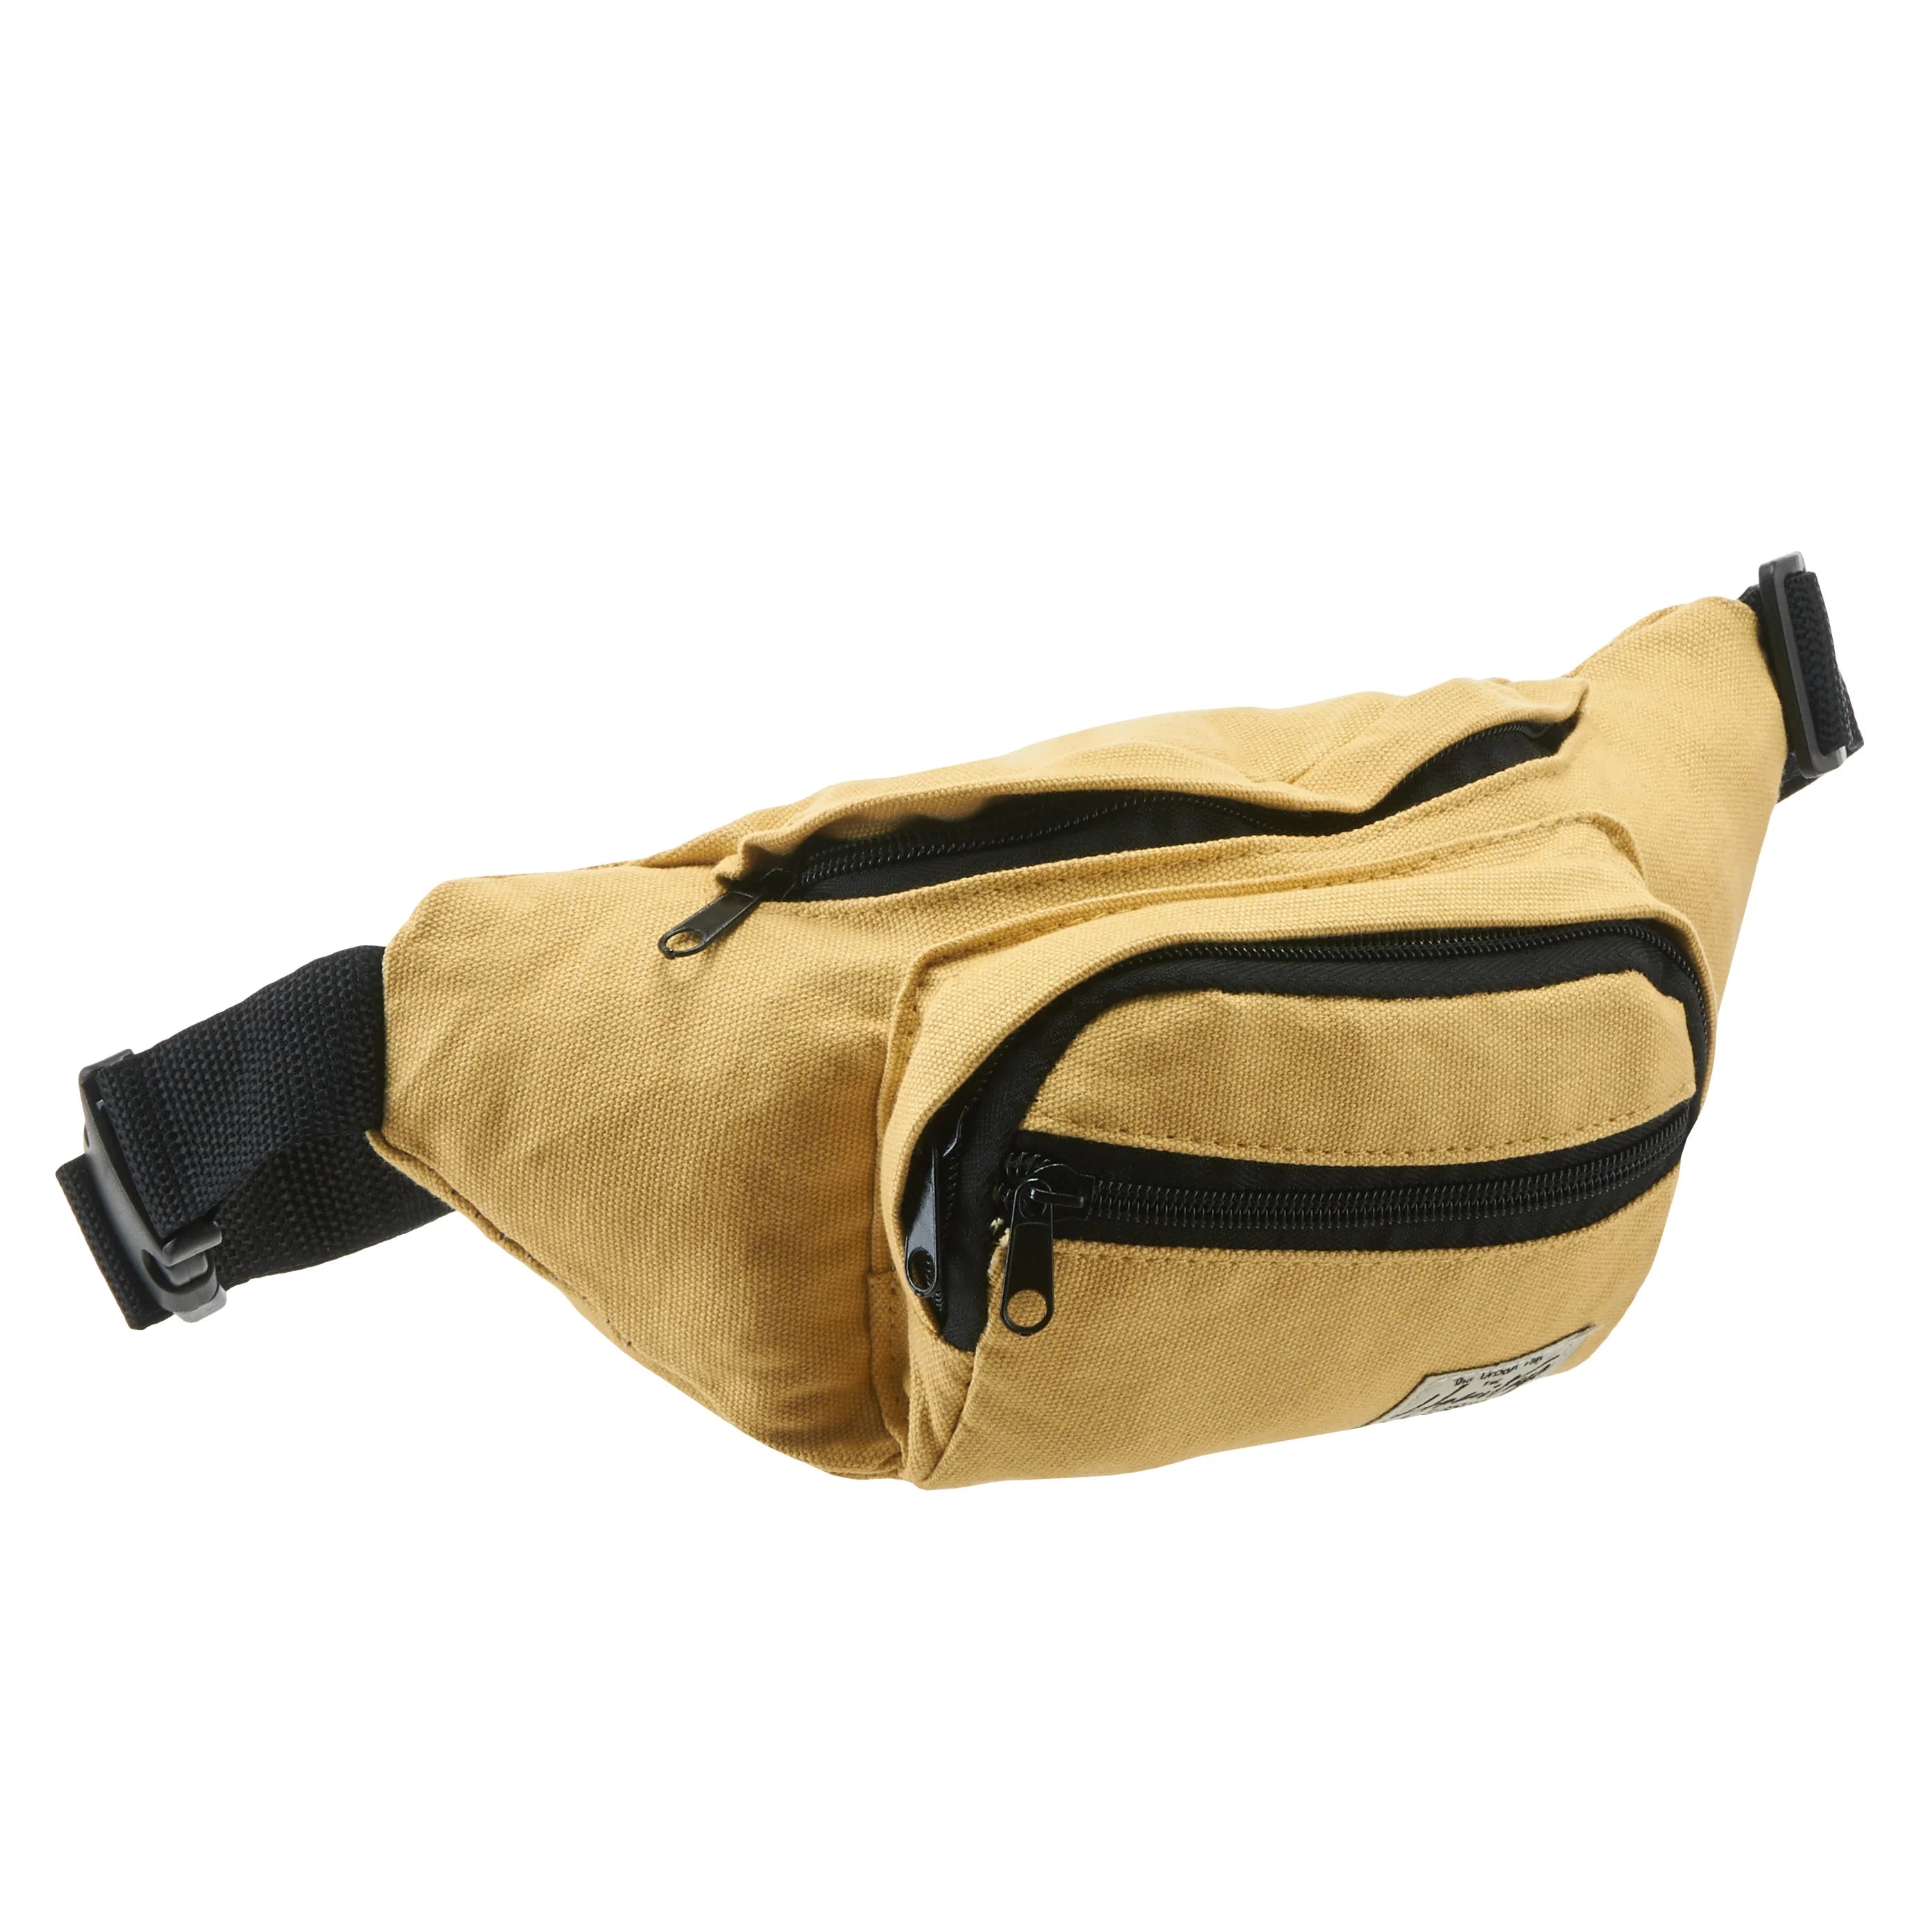 Nowi Heritage belt bag 26 cm - yellow